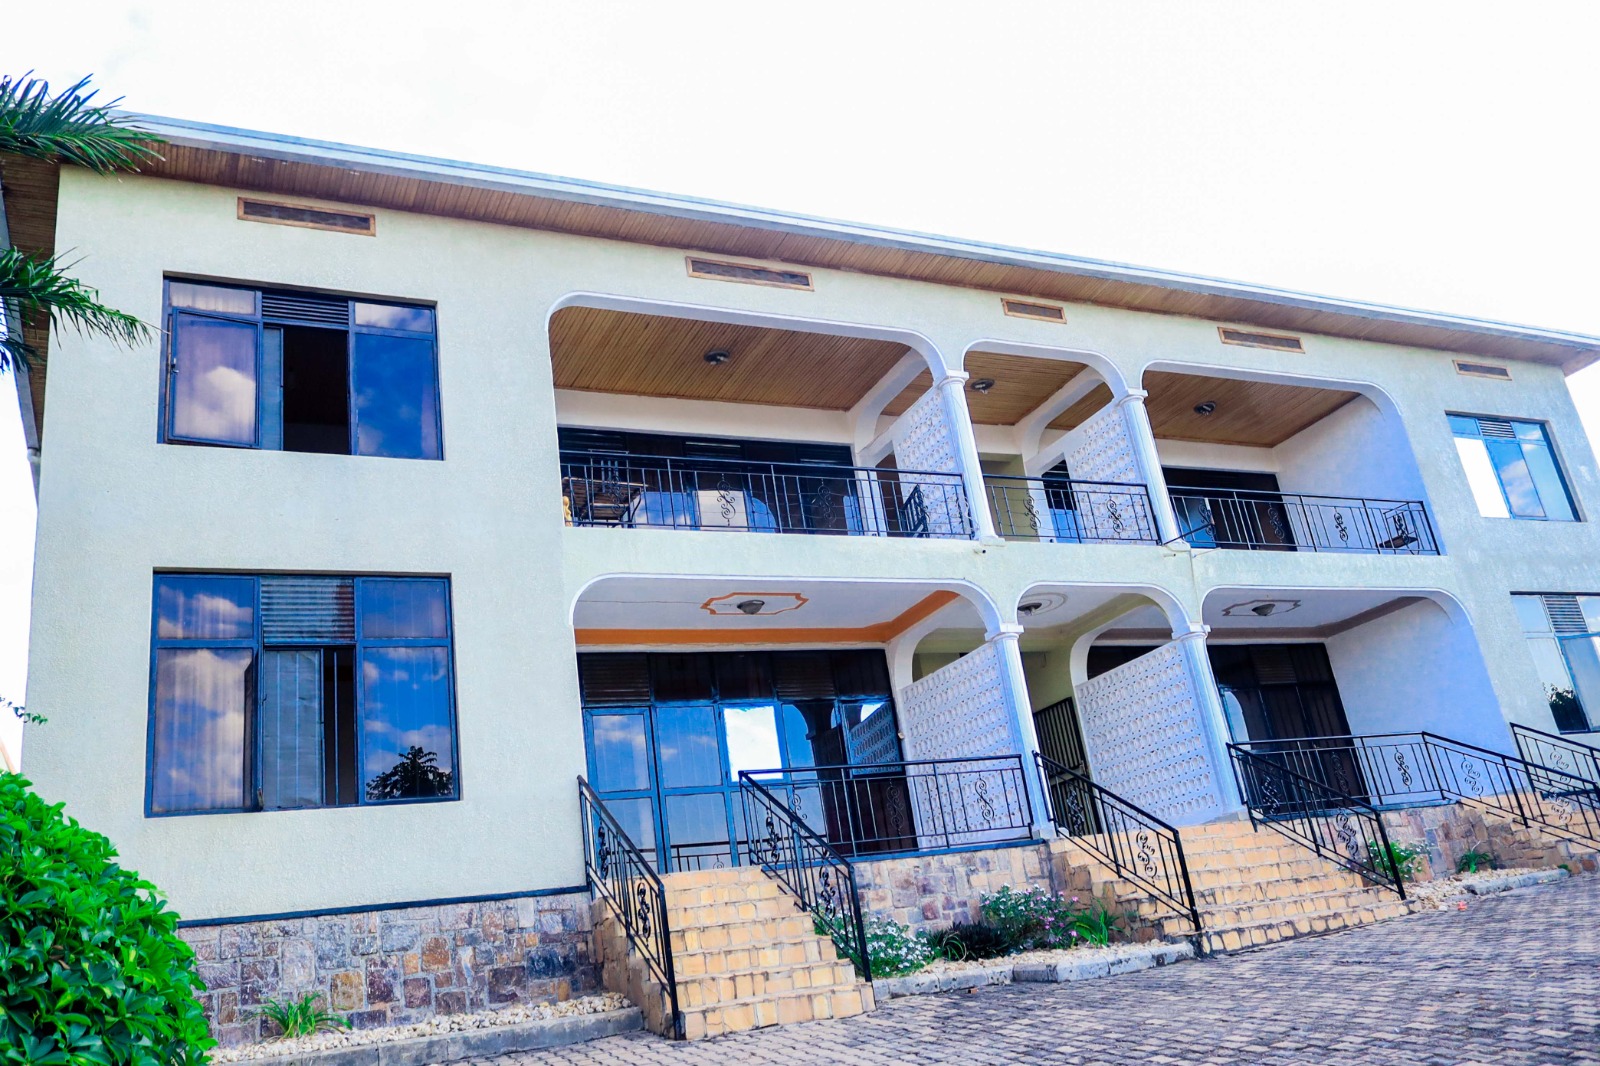 V006 Kacyiru Nice apartment for rent in Kacyiru at lowest price in Kigali Rwanda.Call/watsap +250788385831